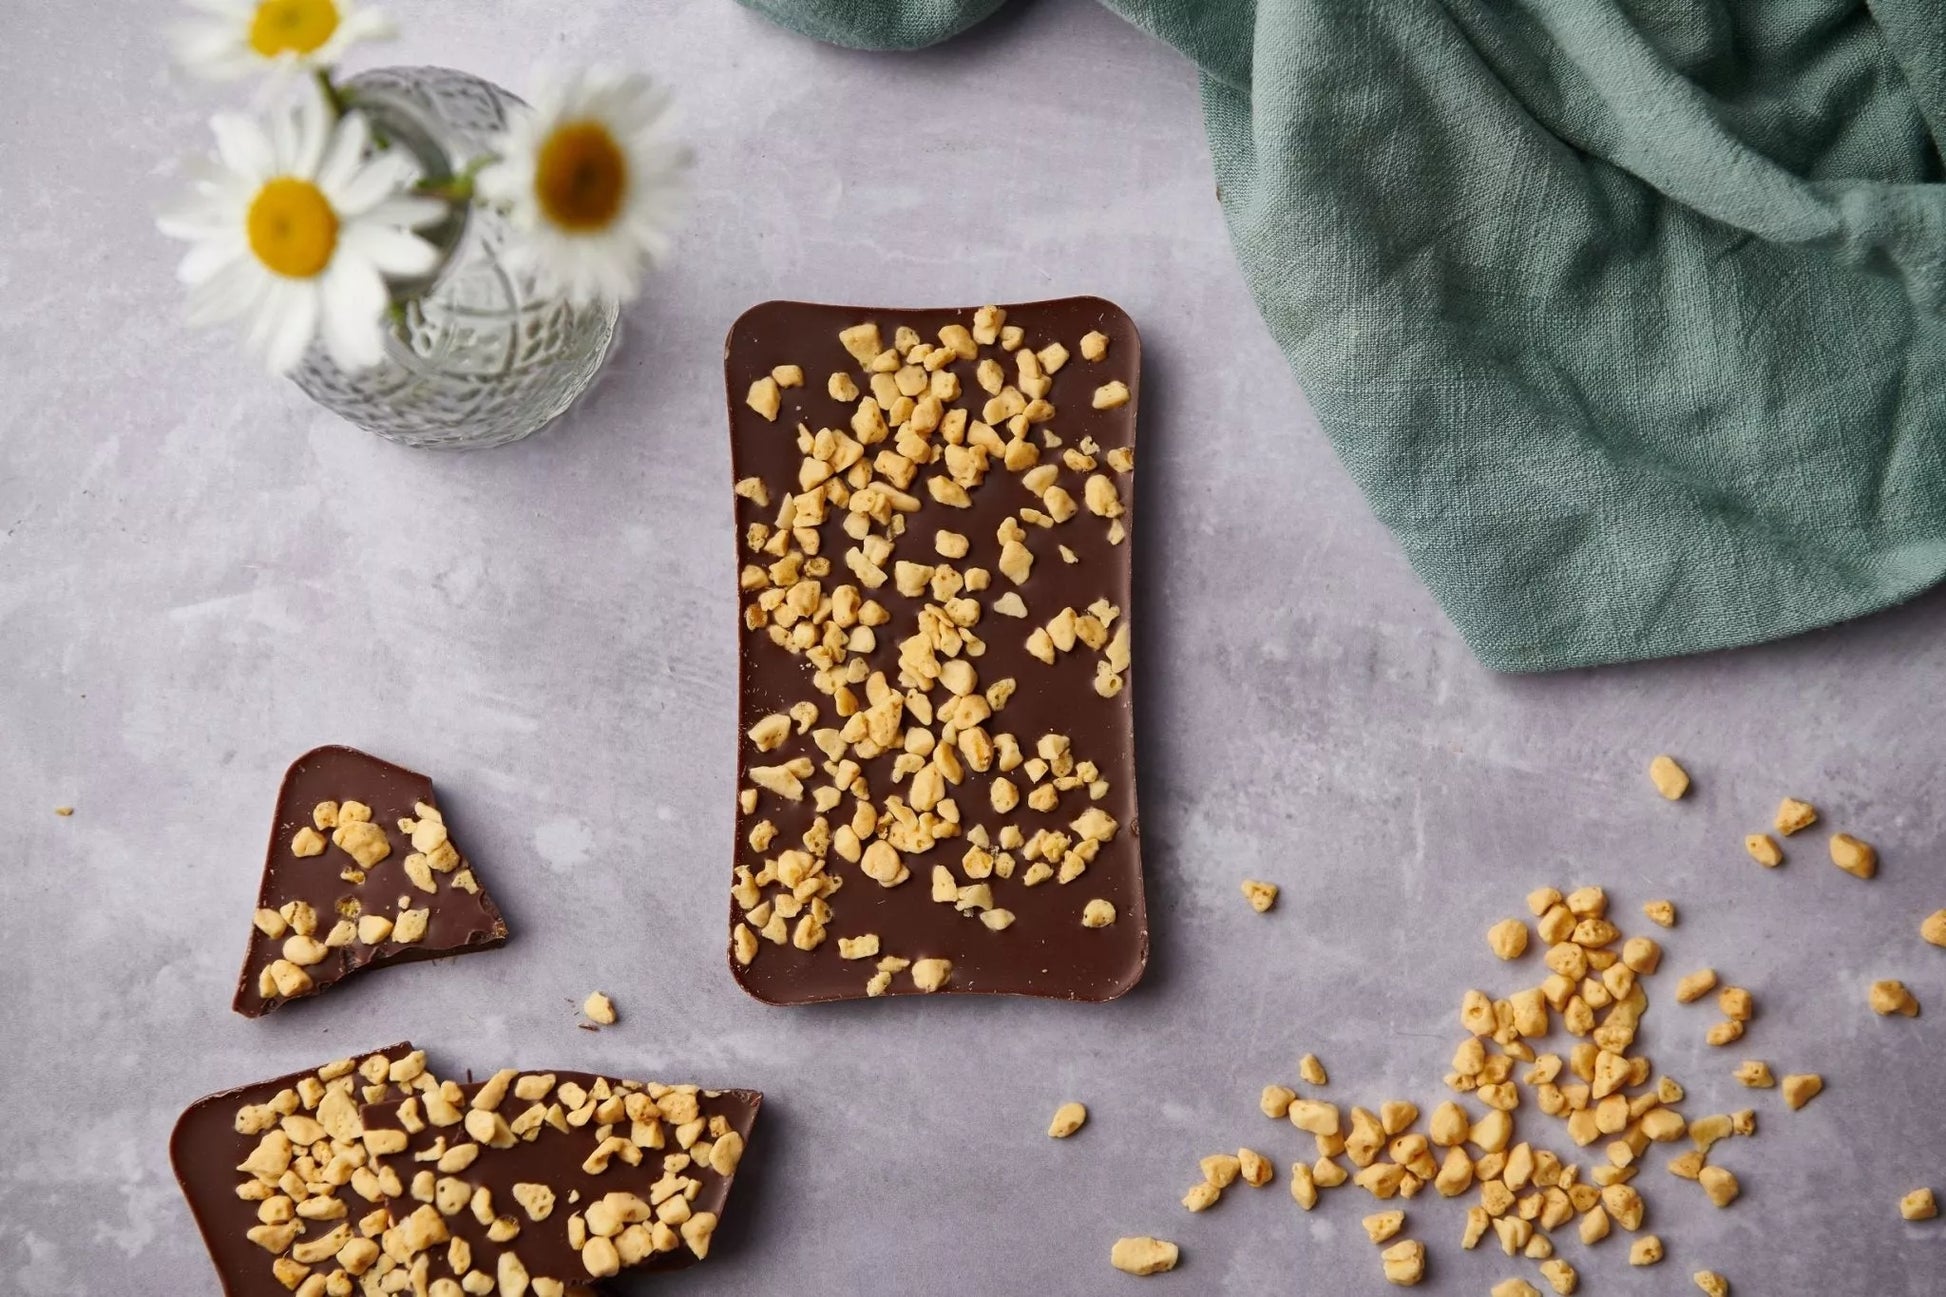 Honeycomb Rice Milk Chocolate Slab | 100g Dairy Free Vegan - Cocoa Libre